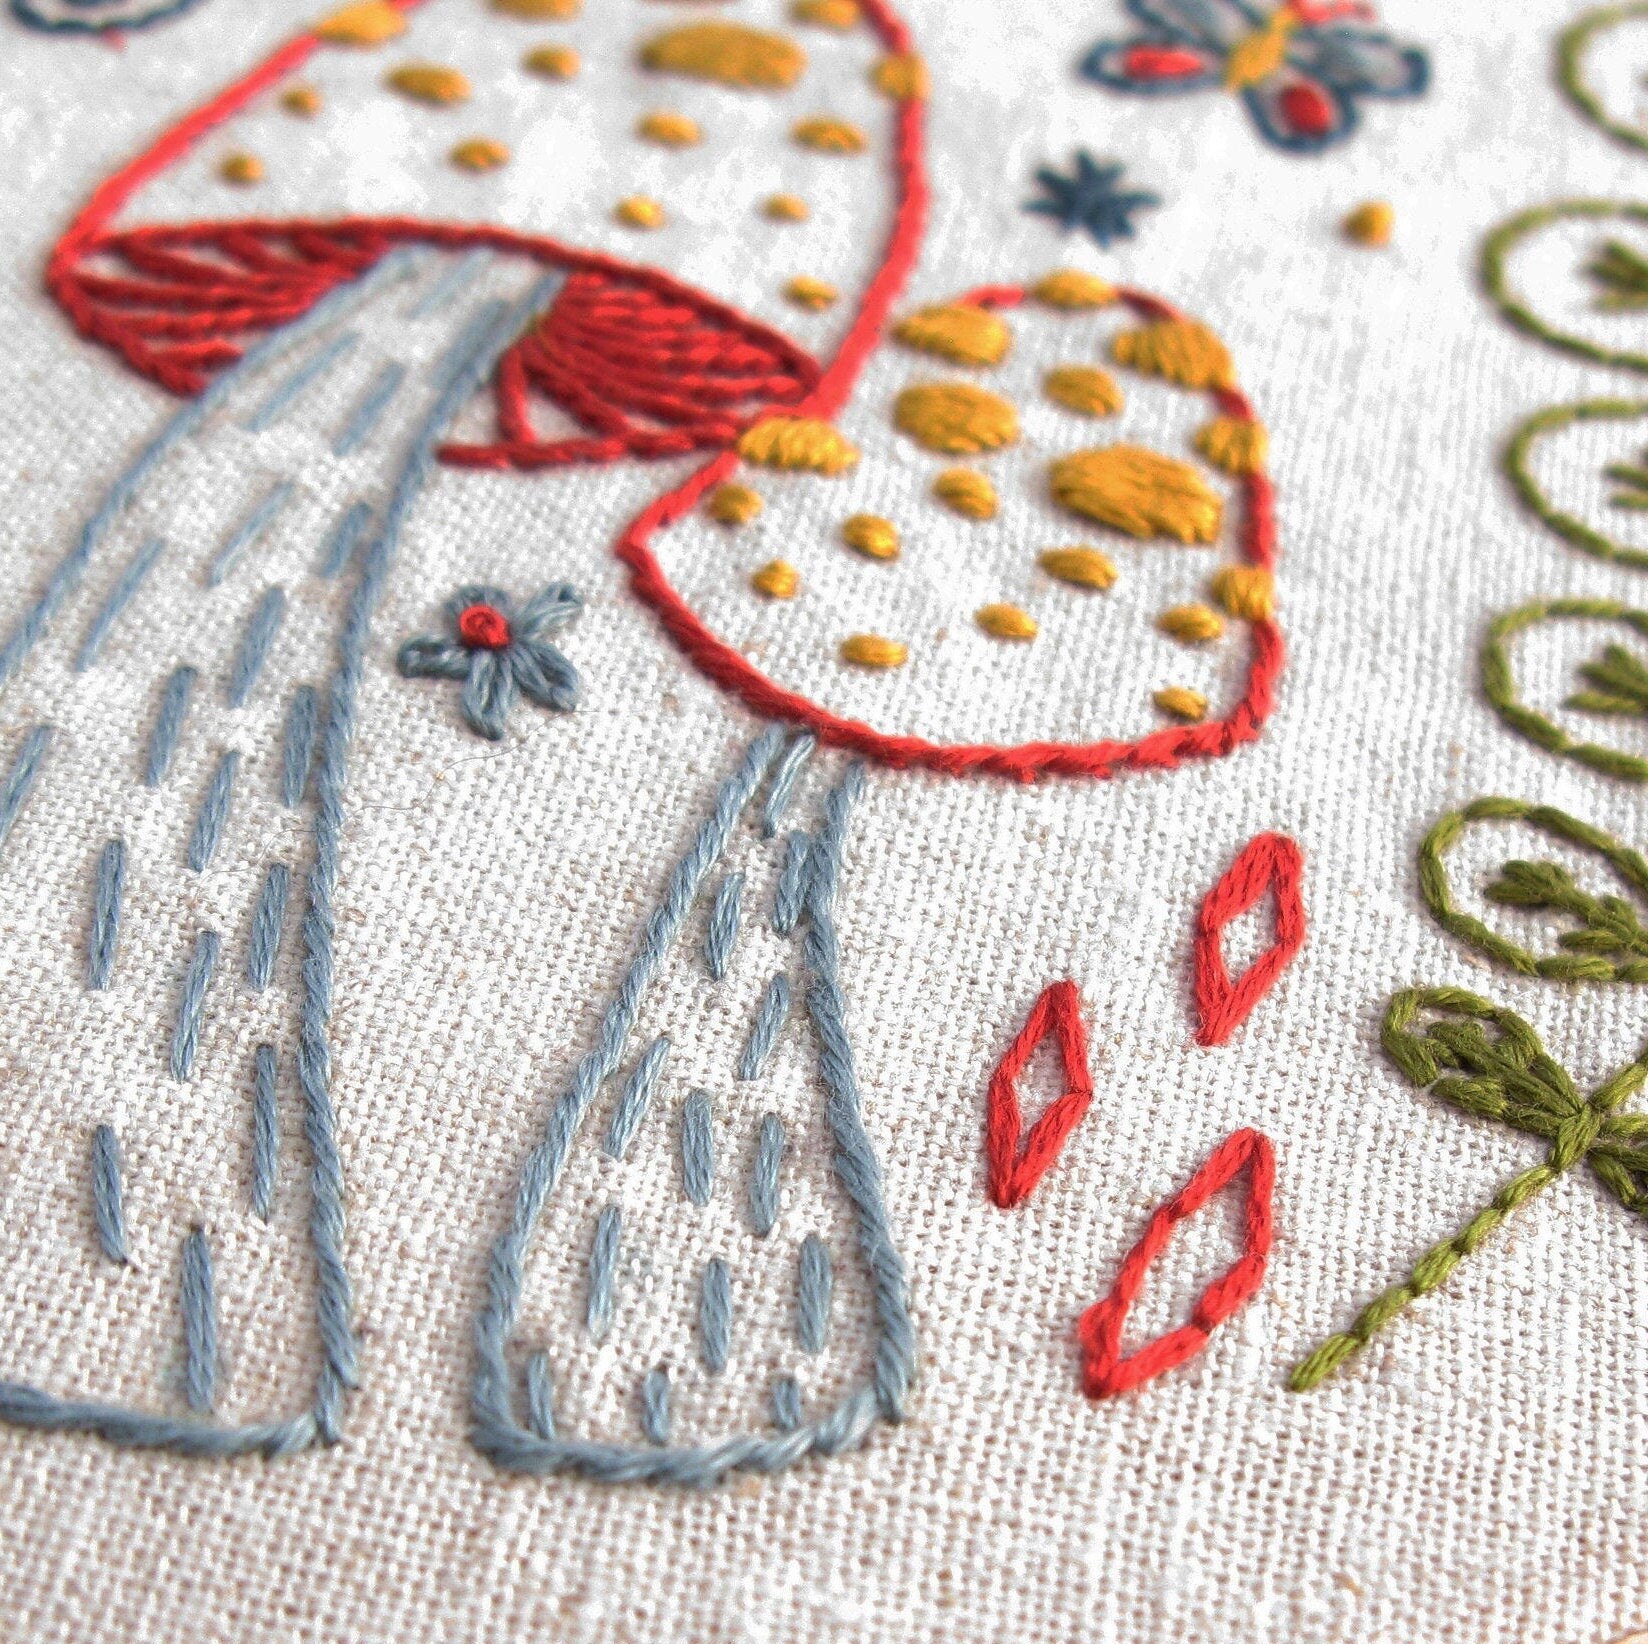 Yiizetony Stamped Embroidery Kit for Beginners Starters Cross Stitch Kits,  Mushroom Crewel Embroidery Needlepoint Kits for Women, Hand Embroidery